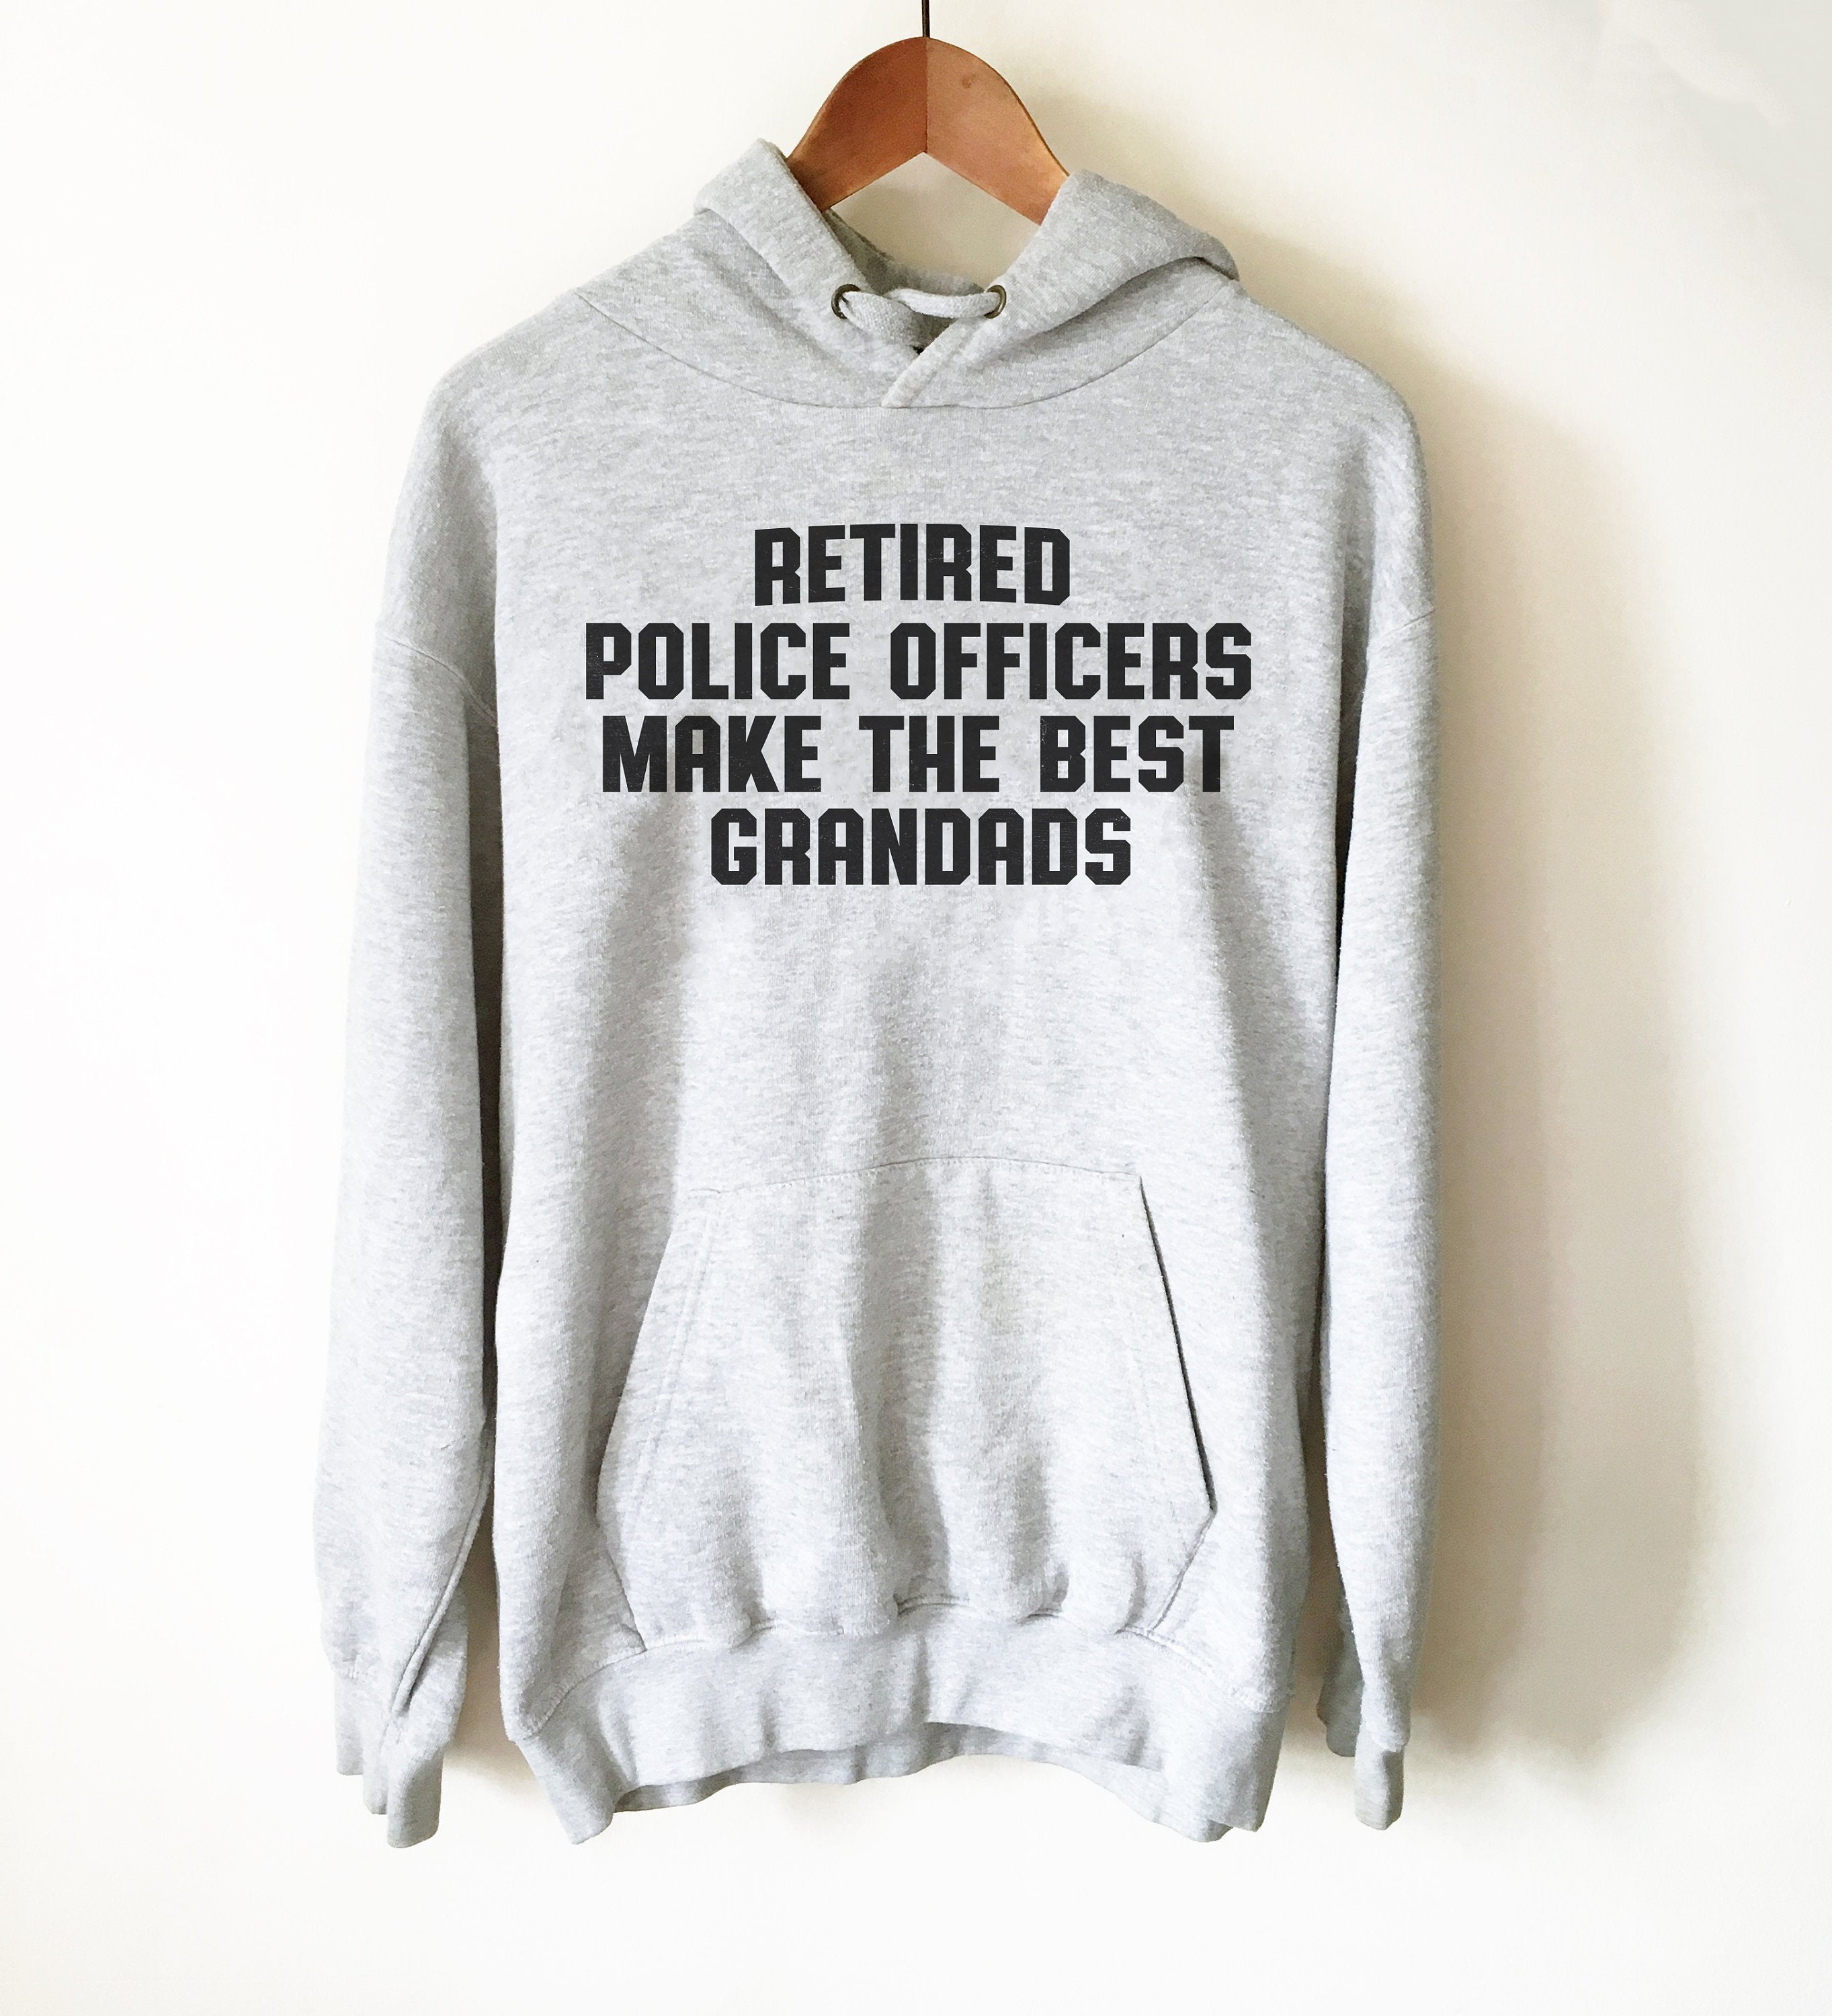 Police Officer Gifts For Men Women Police Officer Cups Police Officer  Graduation | eBay